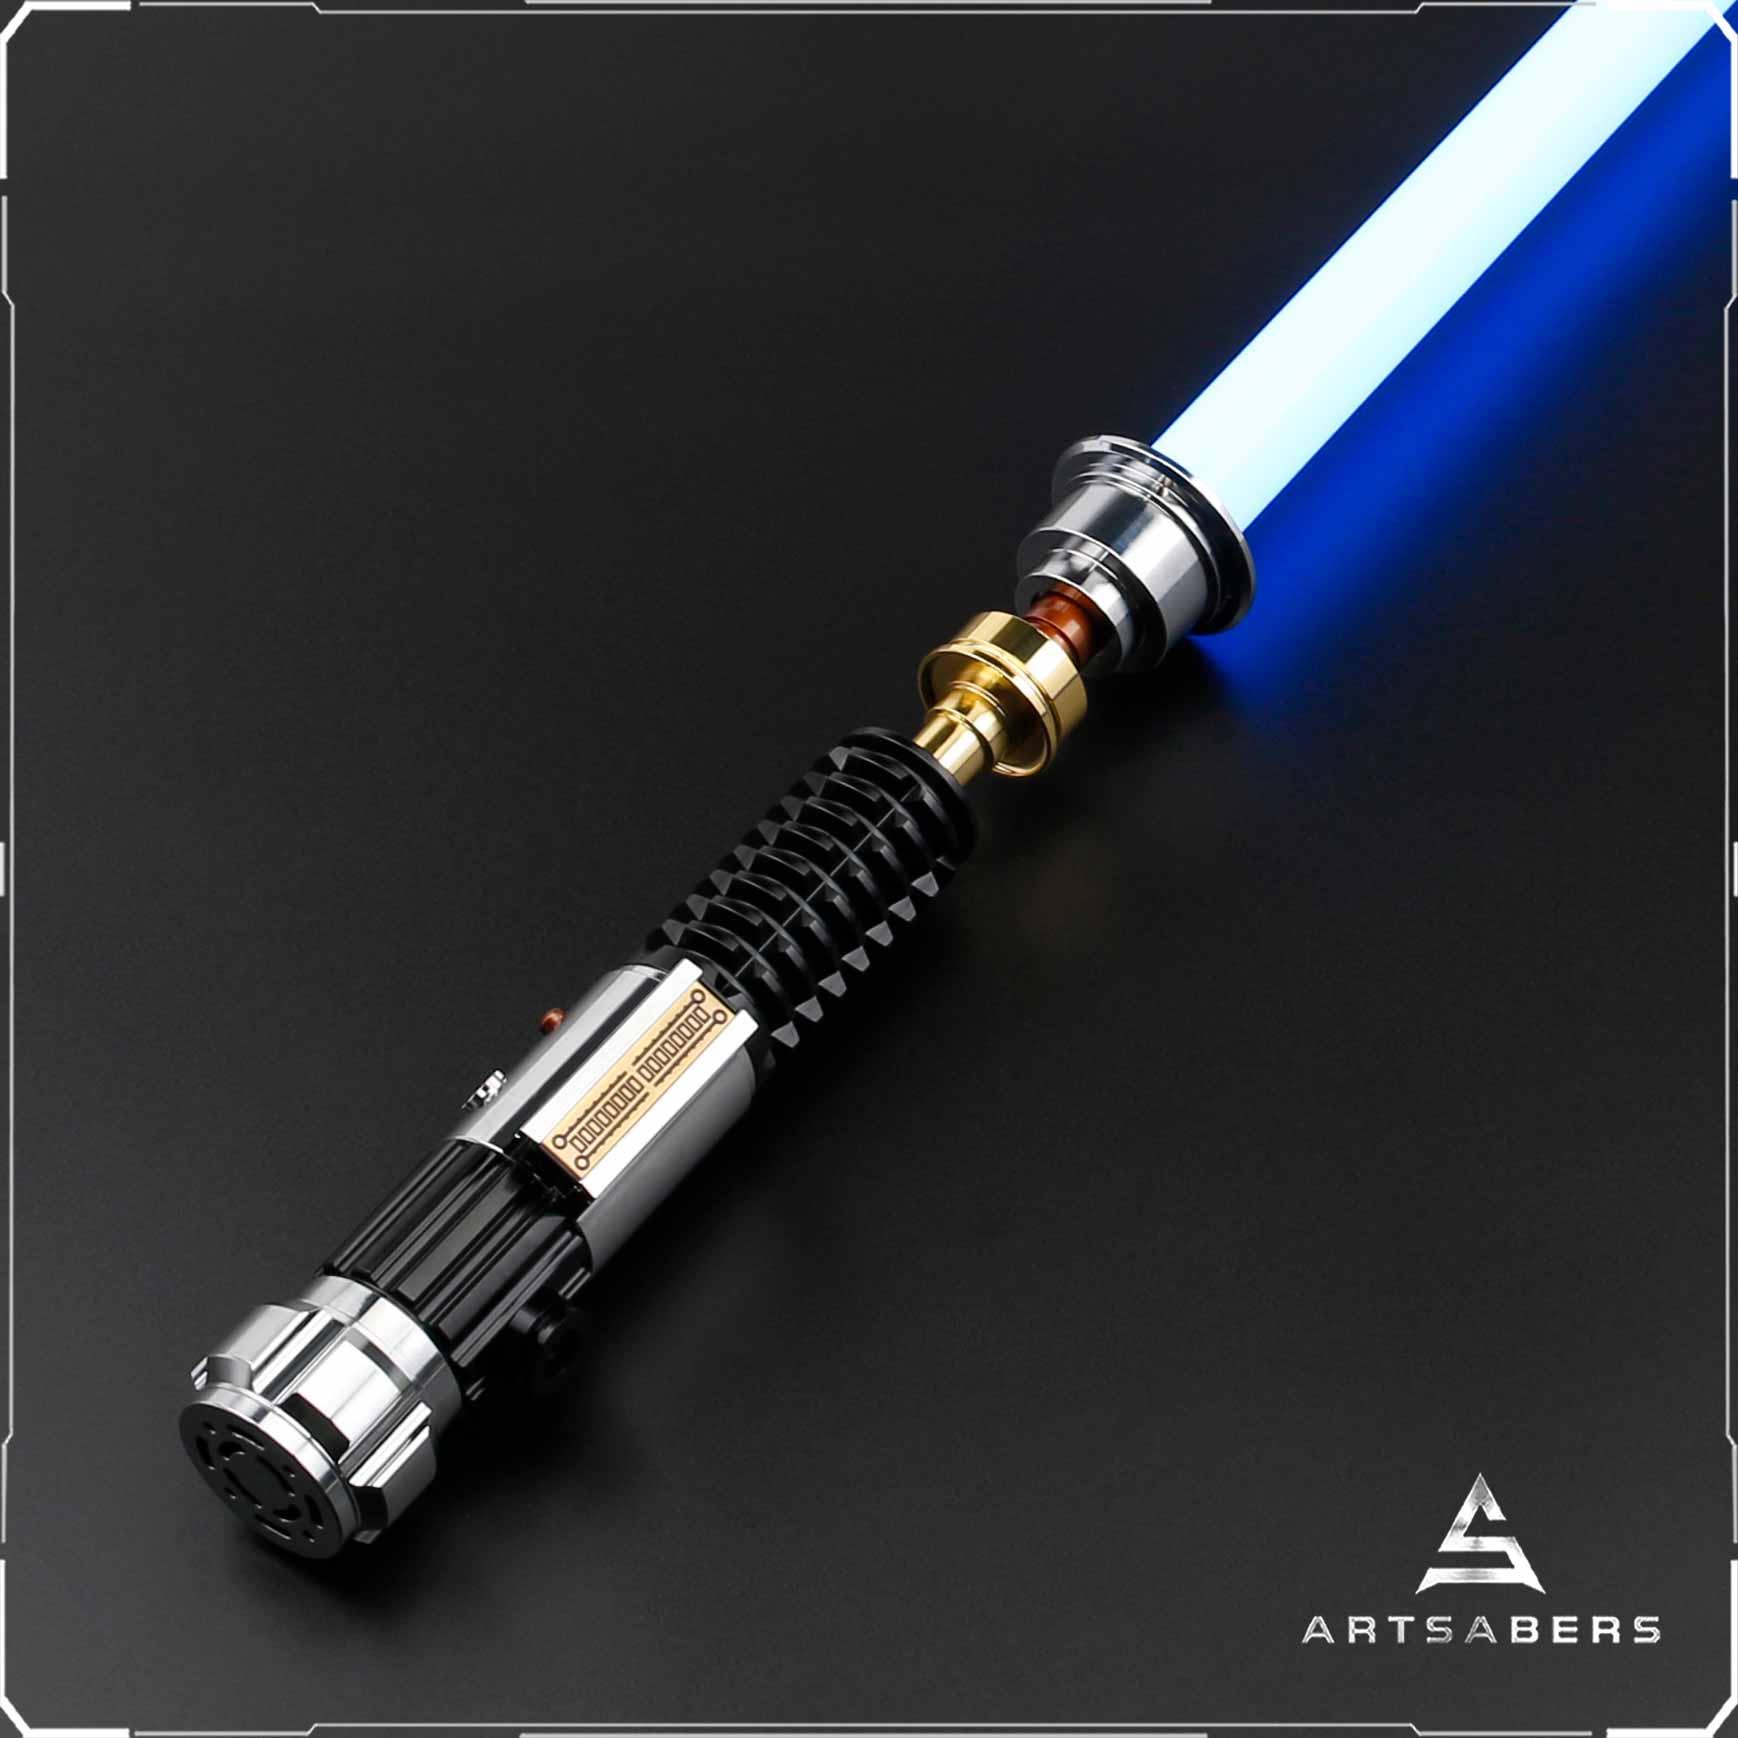 Buy Real Obi Wan Kenobi EP3 Lightsaber | Star Wars Anakin Skywalker EP3 Lightsaber